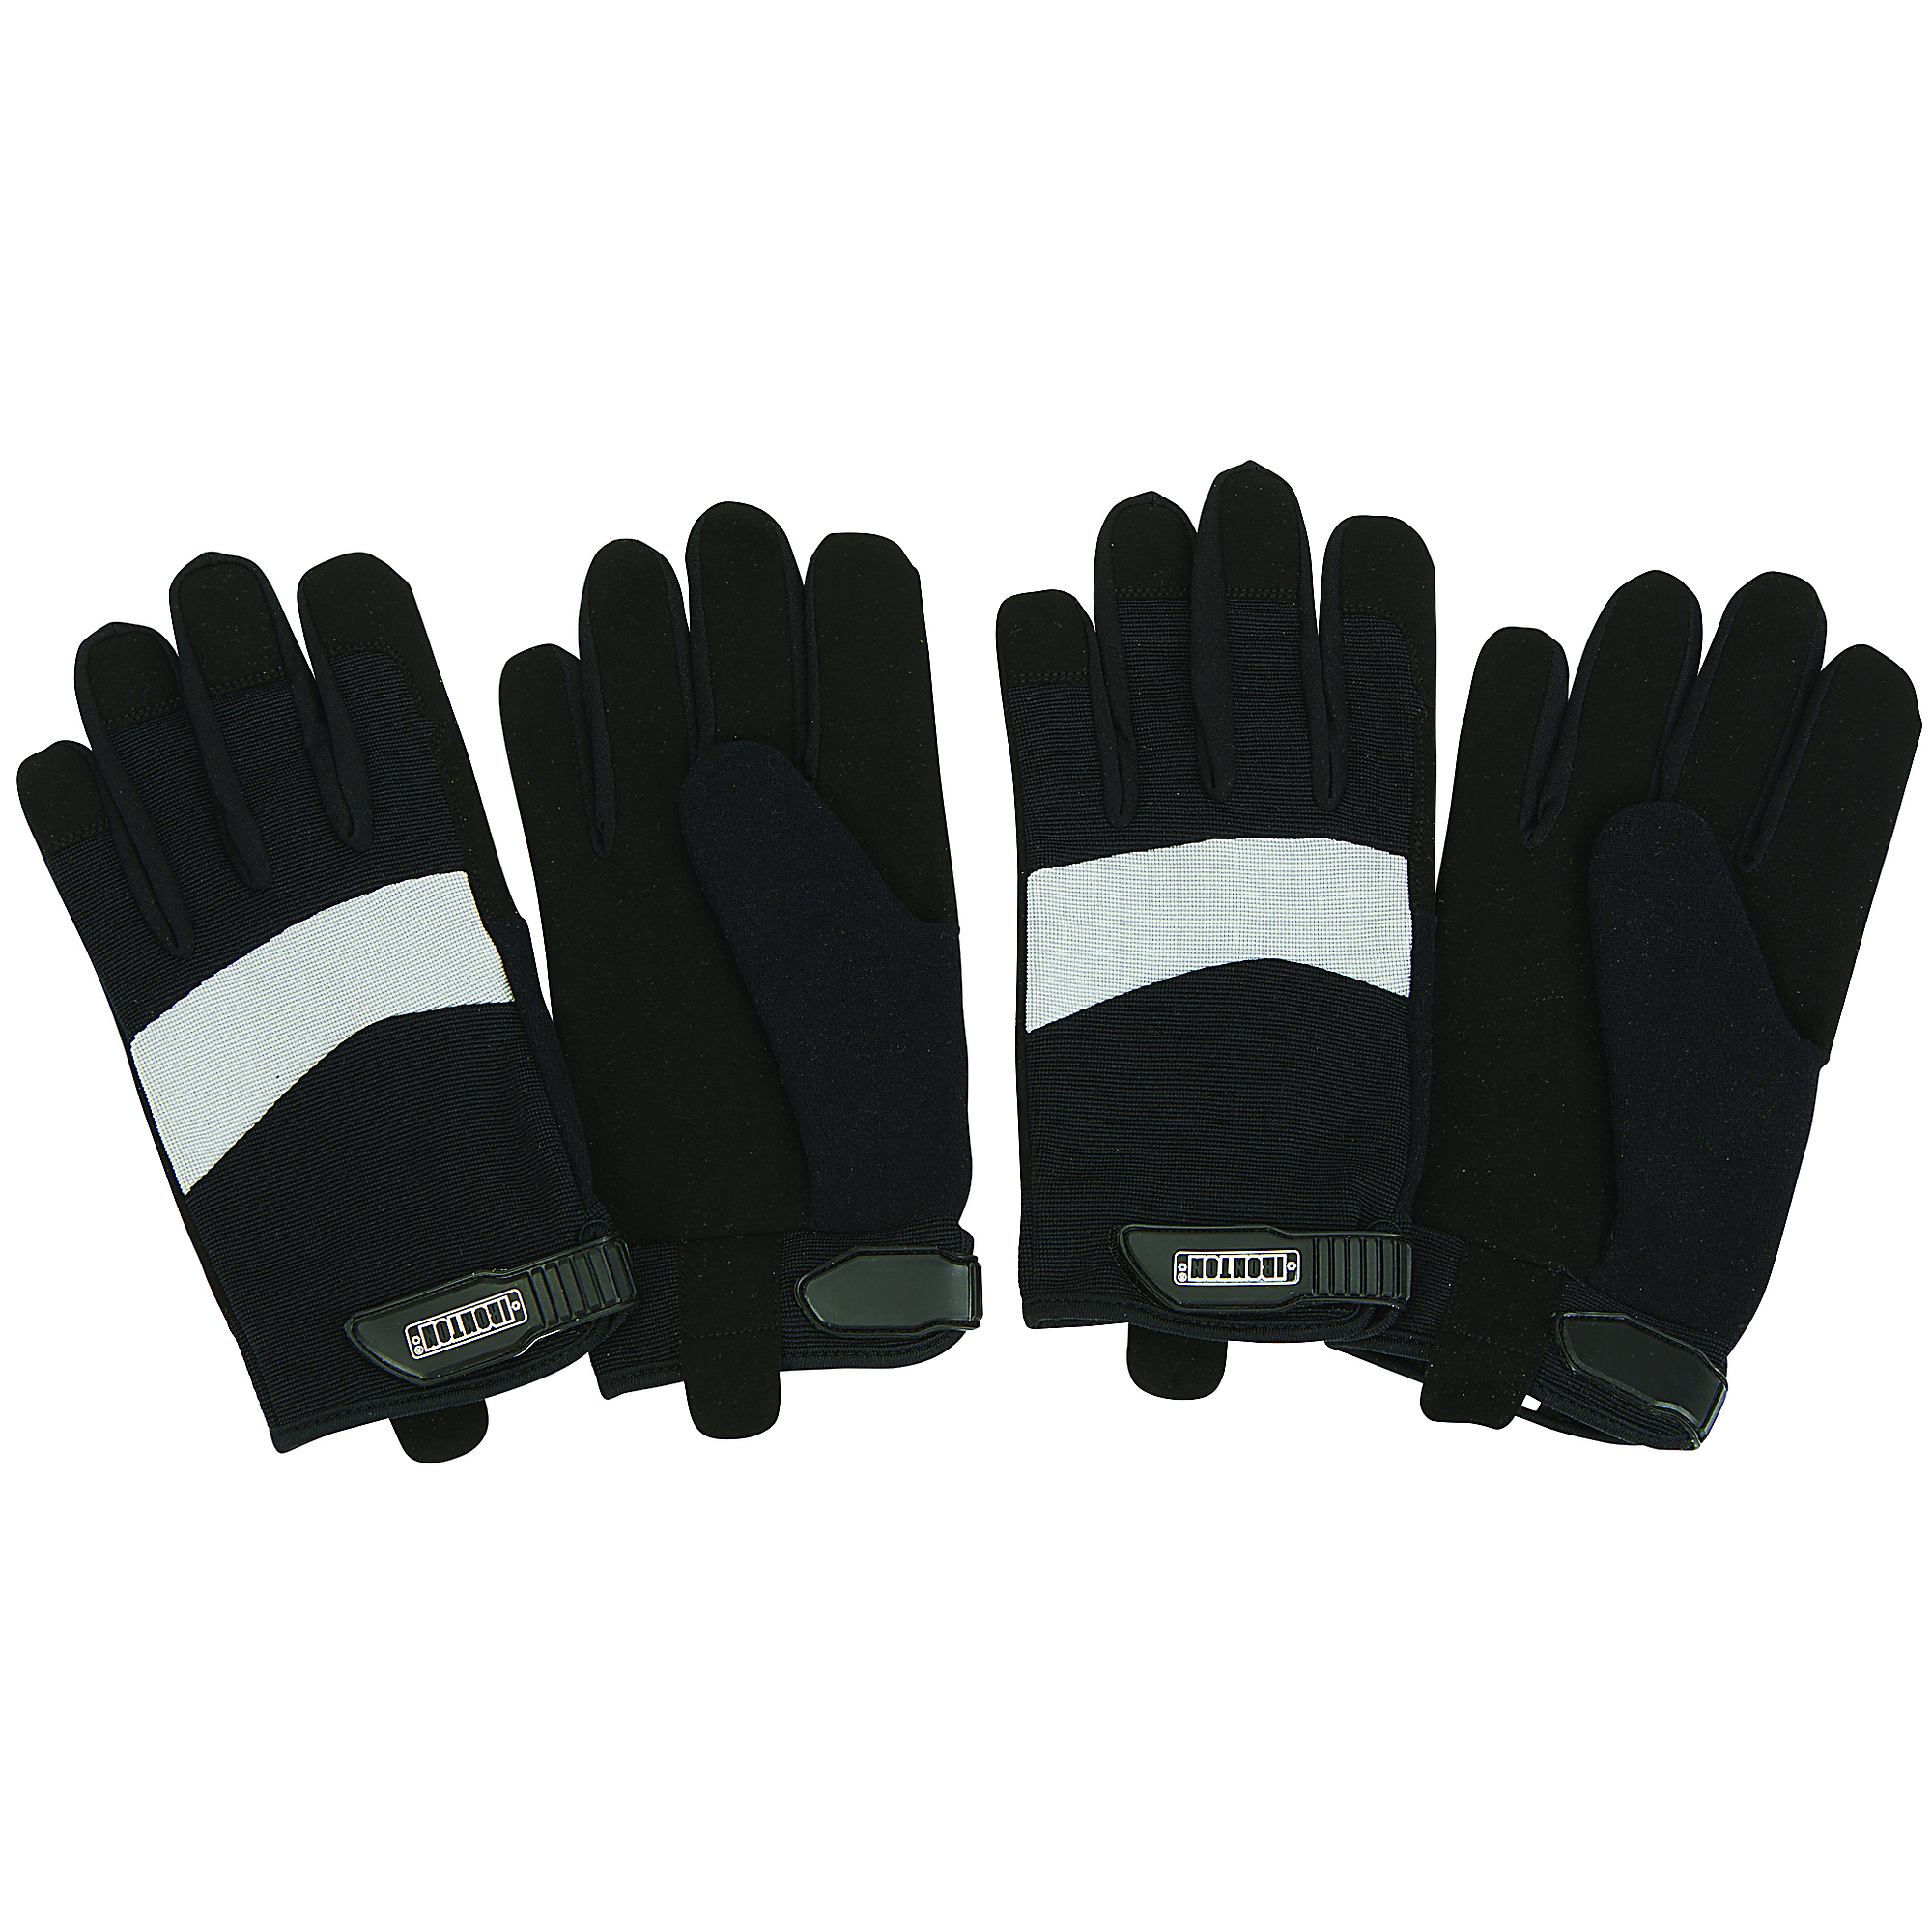 Ironton Men's High-Dexterity Gloves, 2 Pairs, Black/Gray, Large